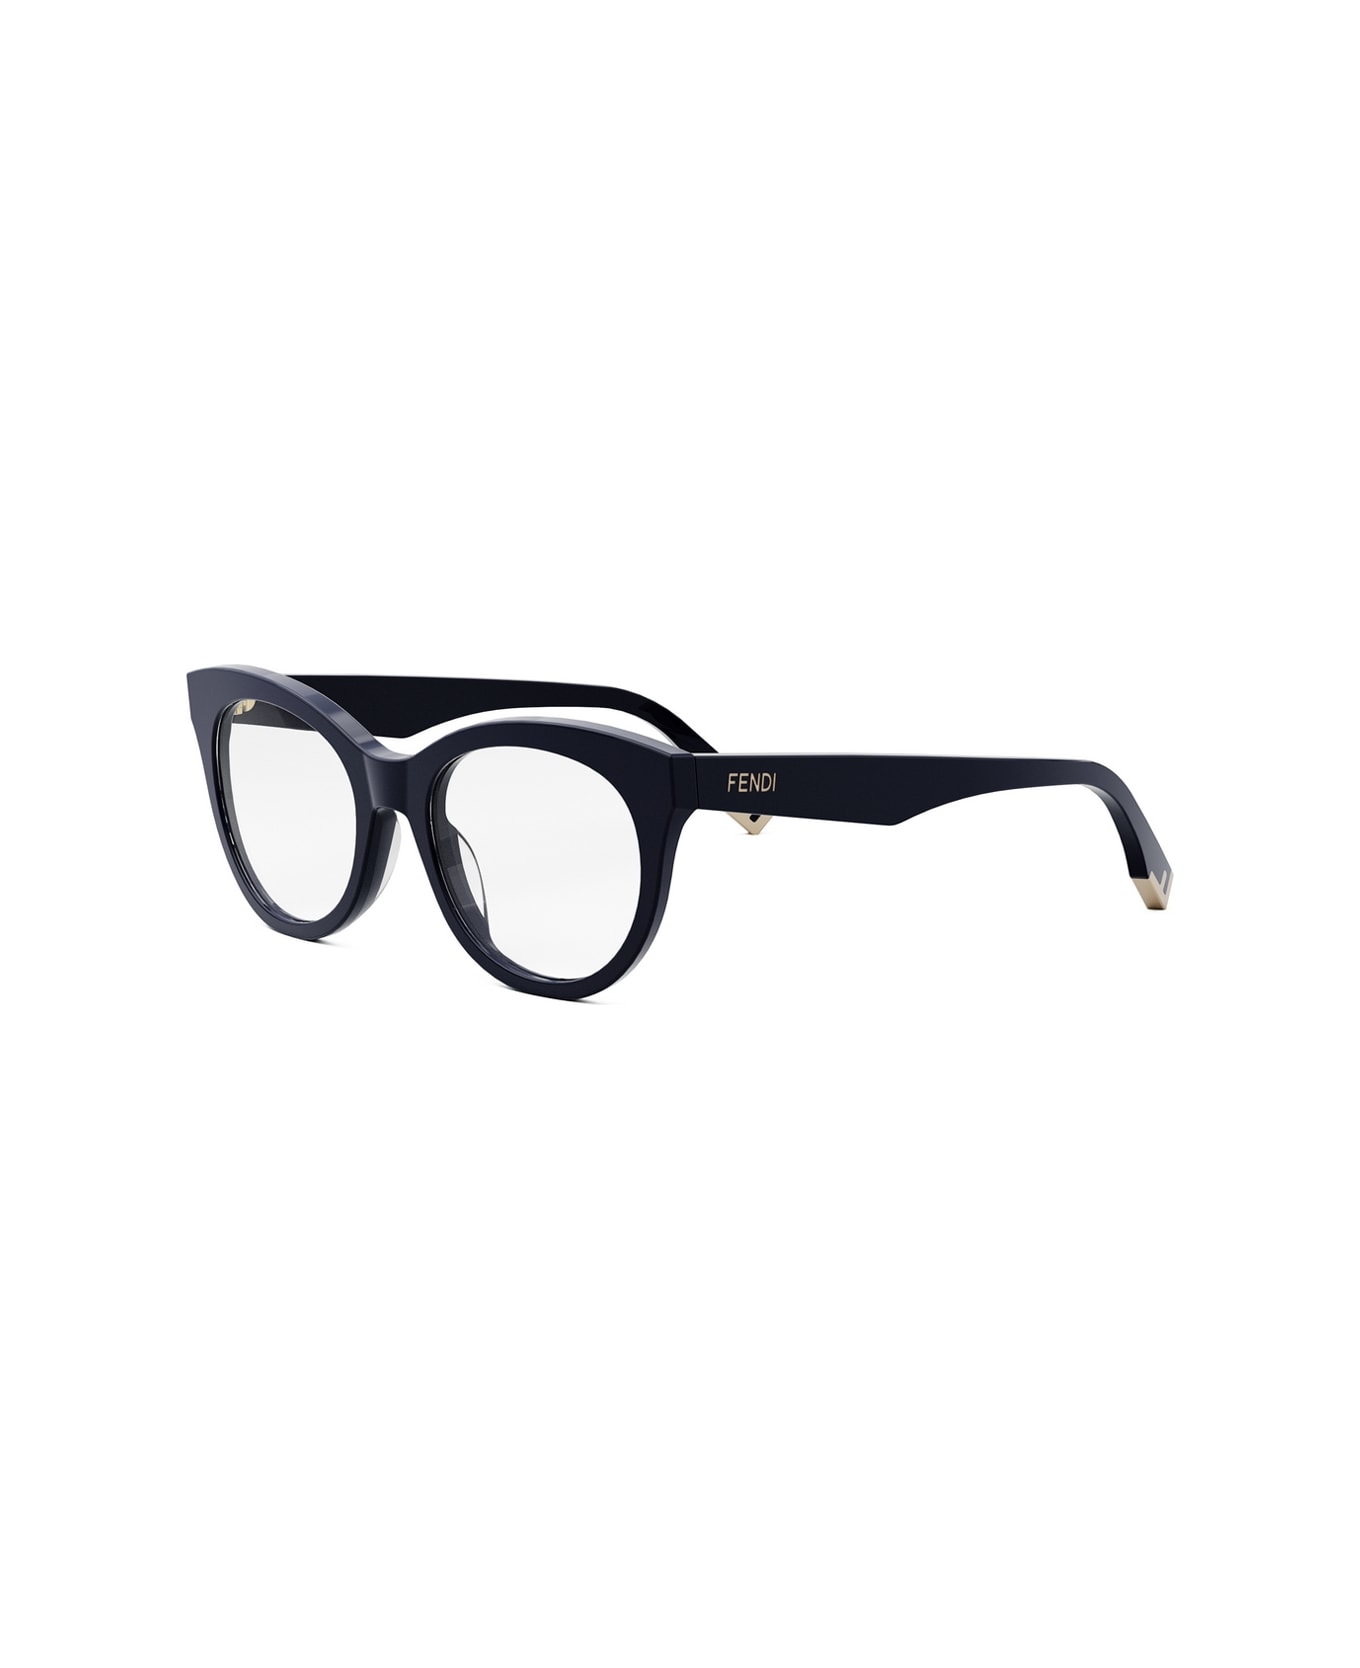 Fendi Eyewear Fe50074i 090 Glasses - Blu